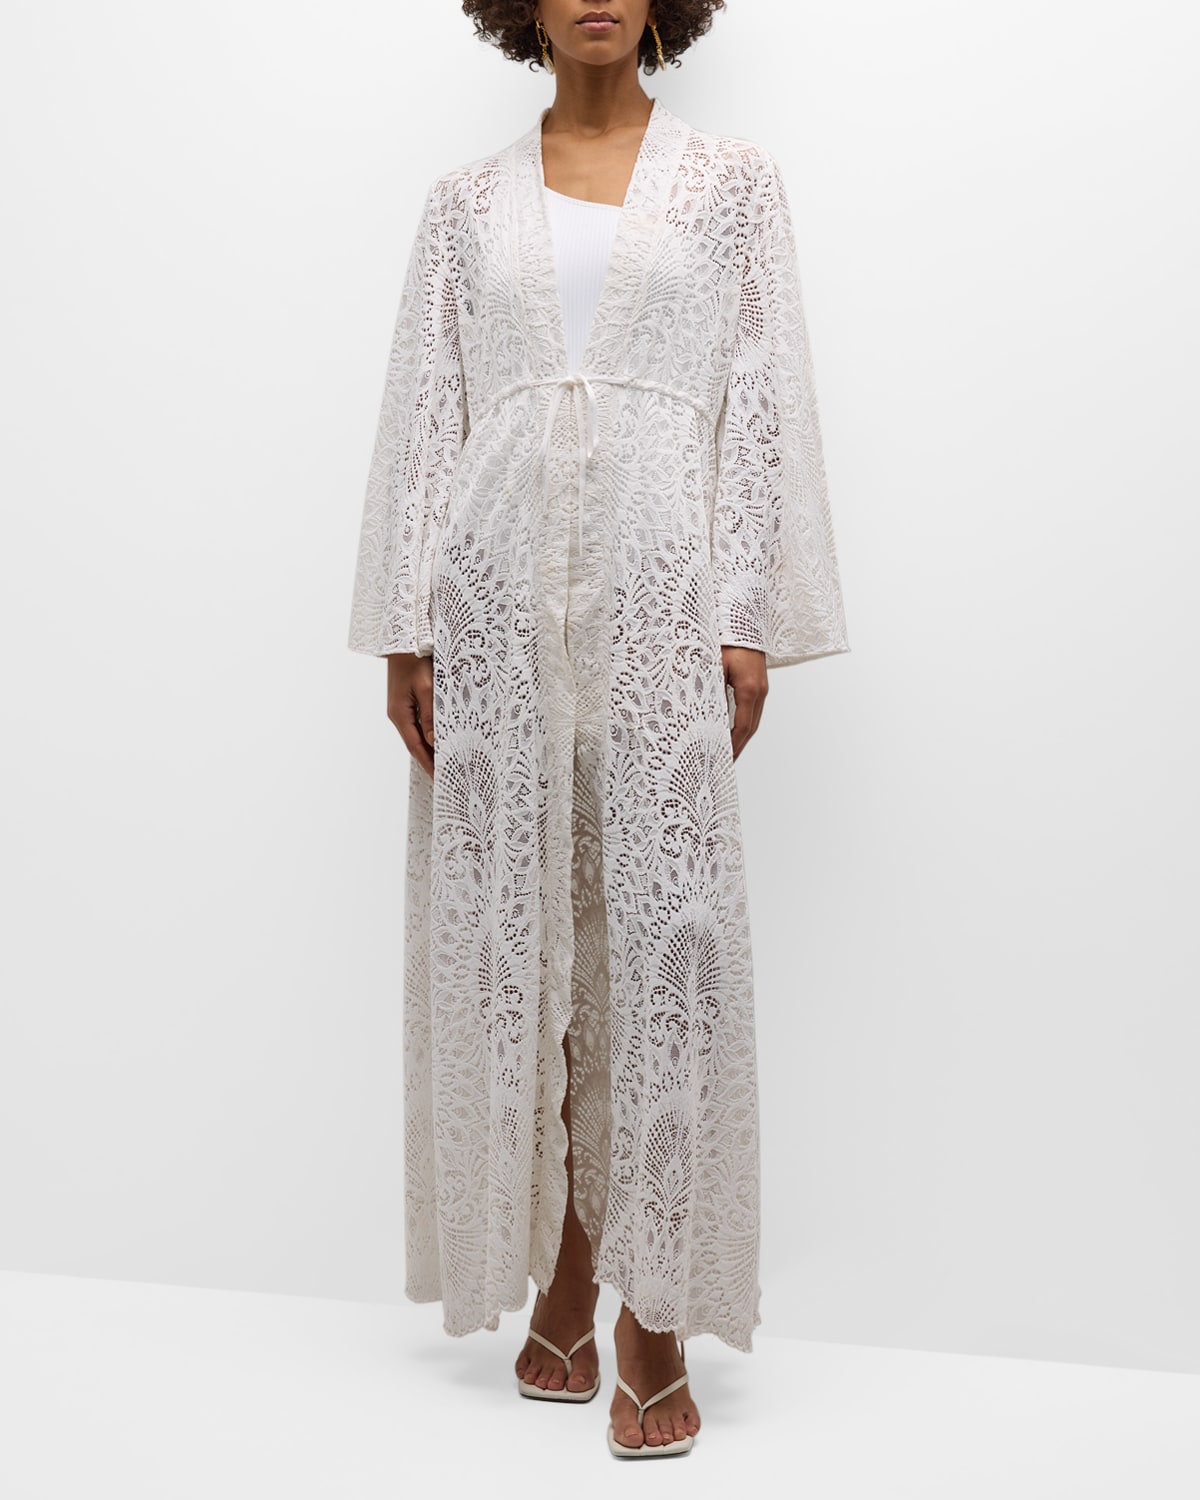 Alexandra Miro Lace Betty Maxi Dress Coverup In White Lace